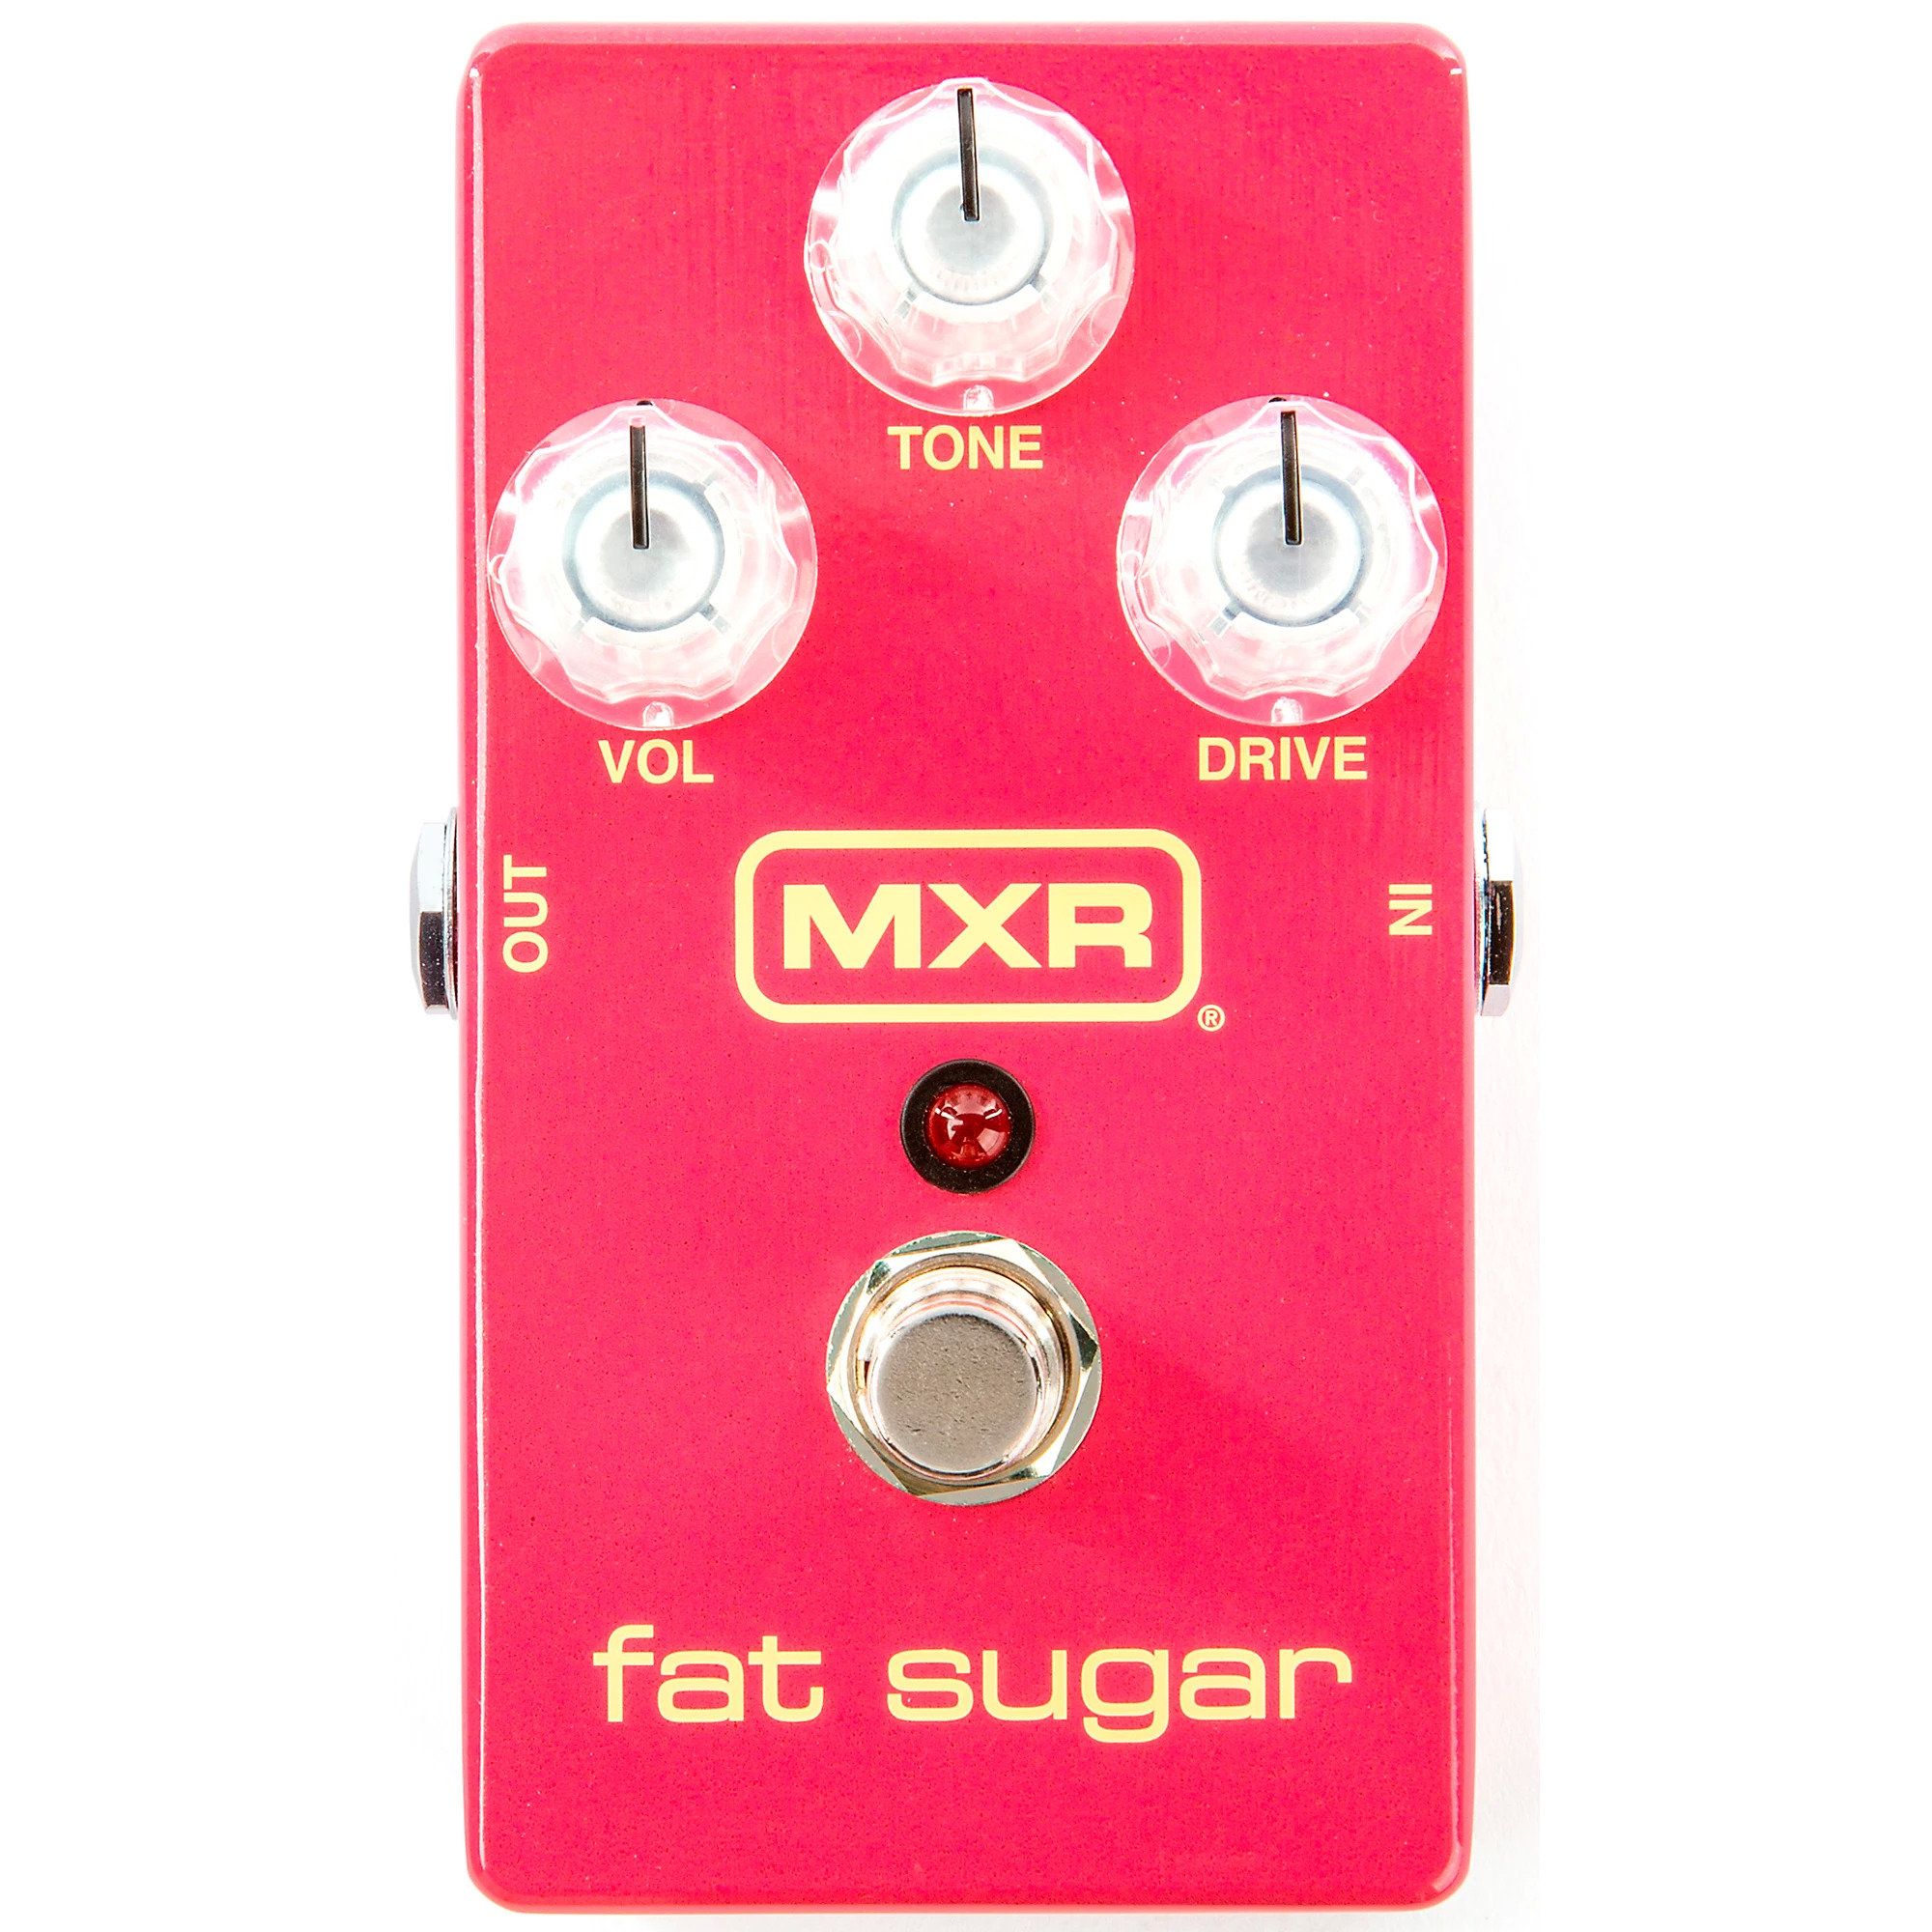 MXR Fat Sugar Drive Guitar Effects Pedal - $79.99